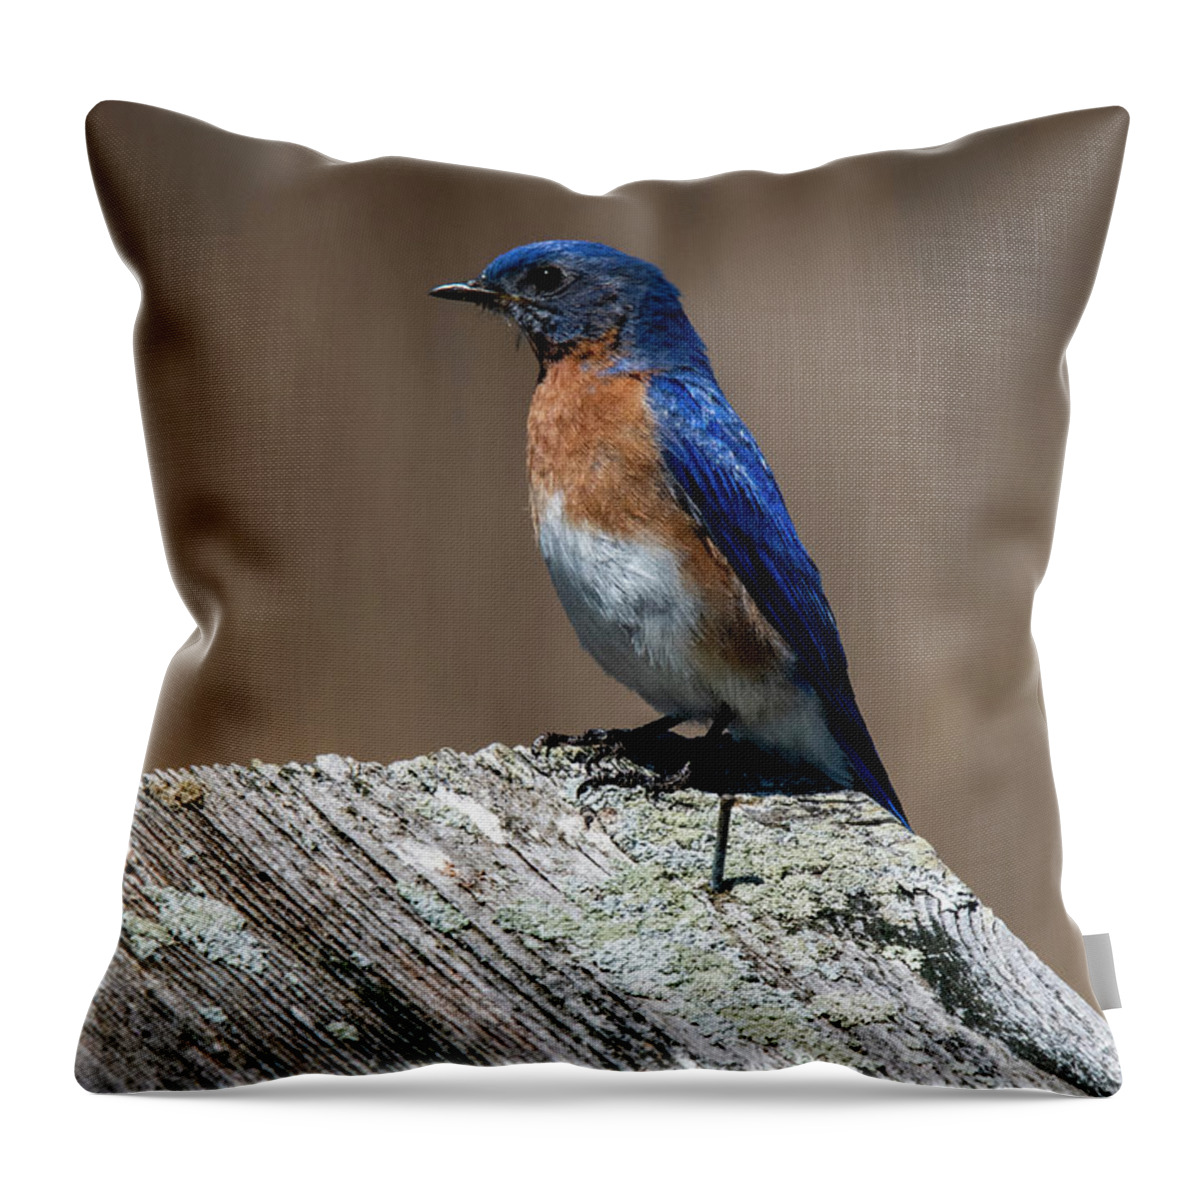 Bird Throw Pillow featuring the photograph Eastern Bluebird by Cathy Kovarik